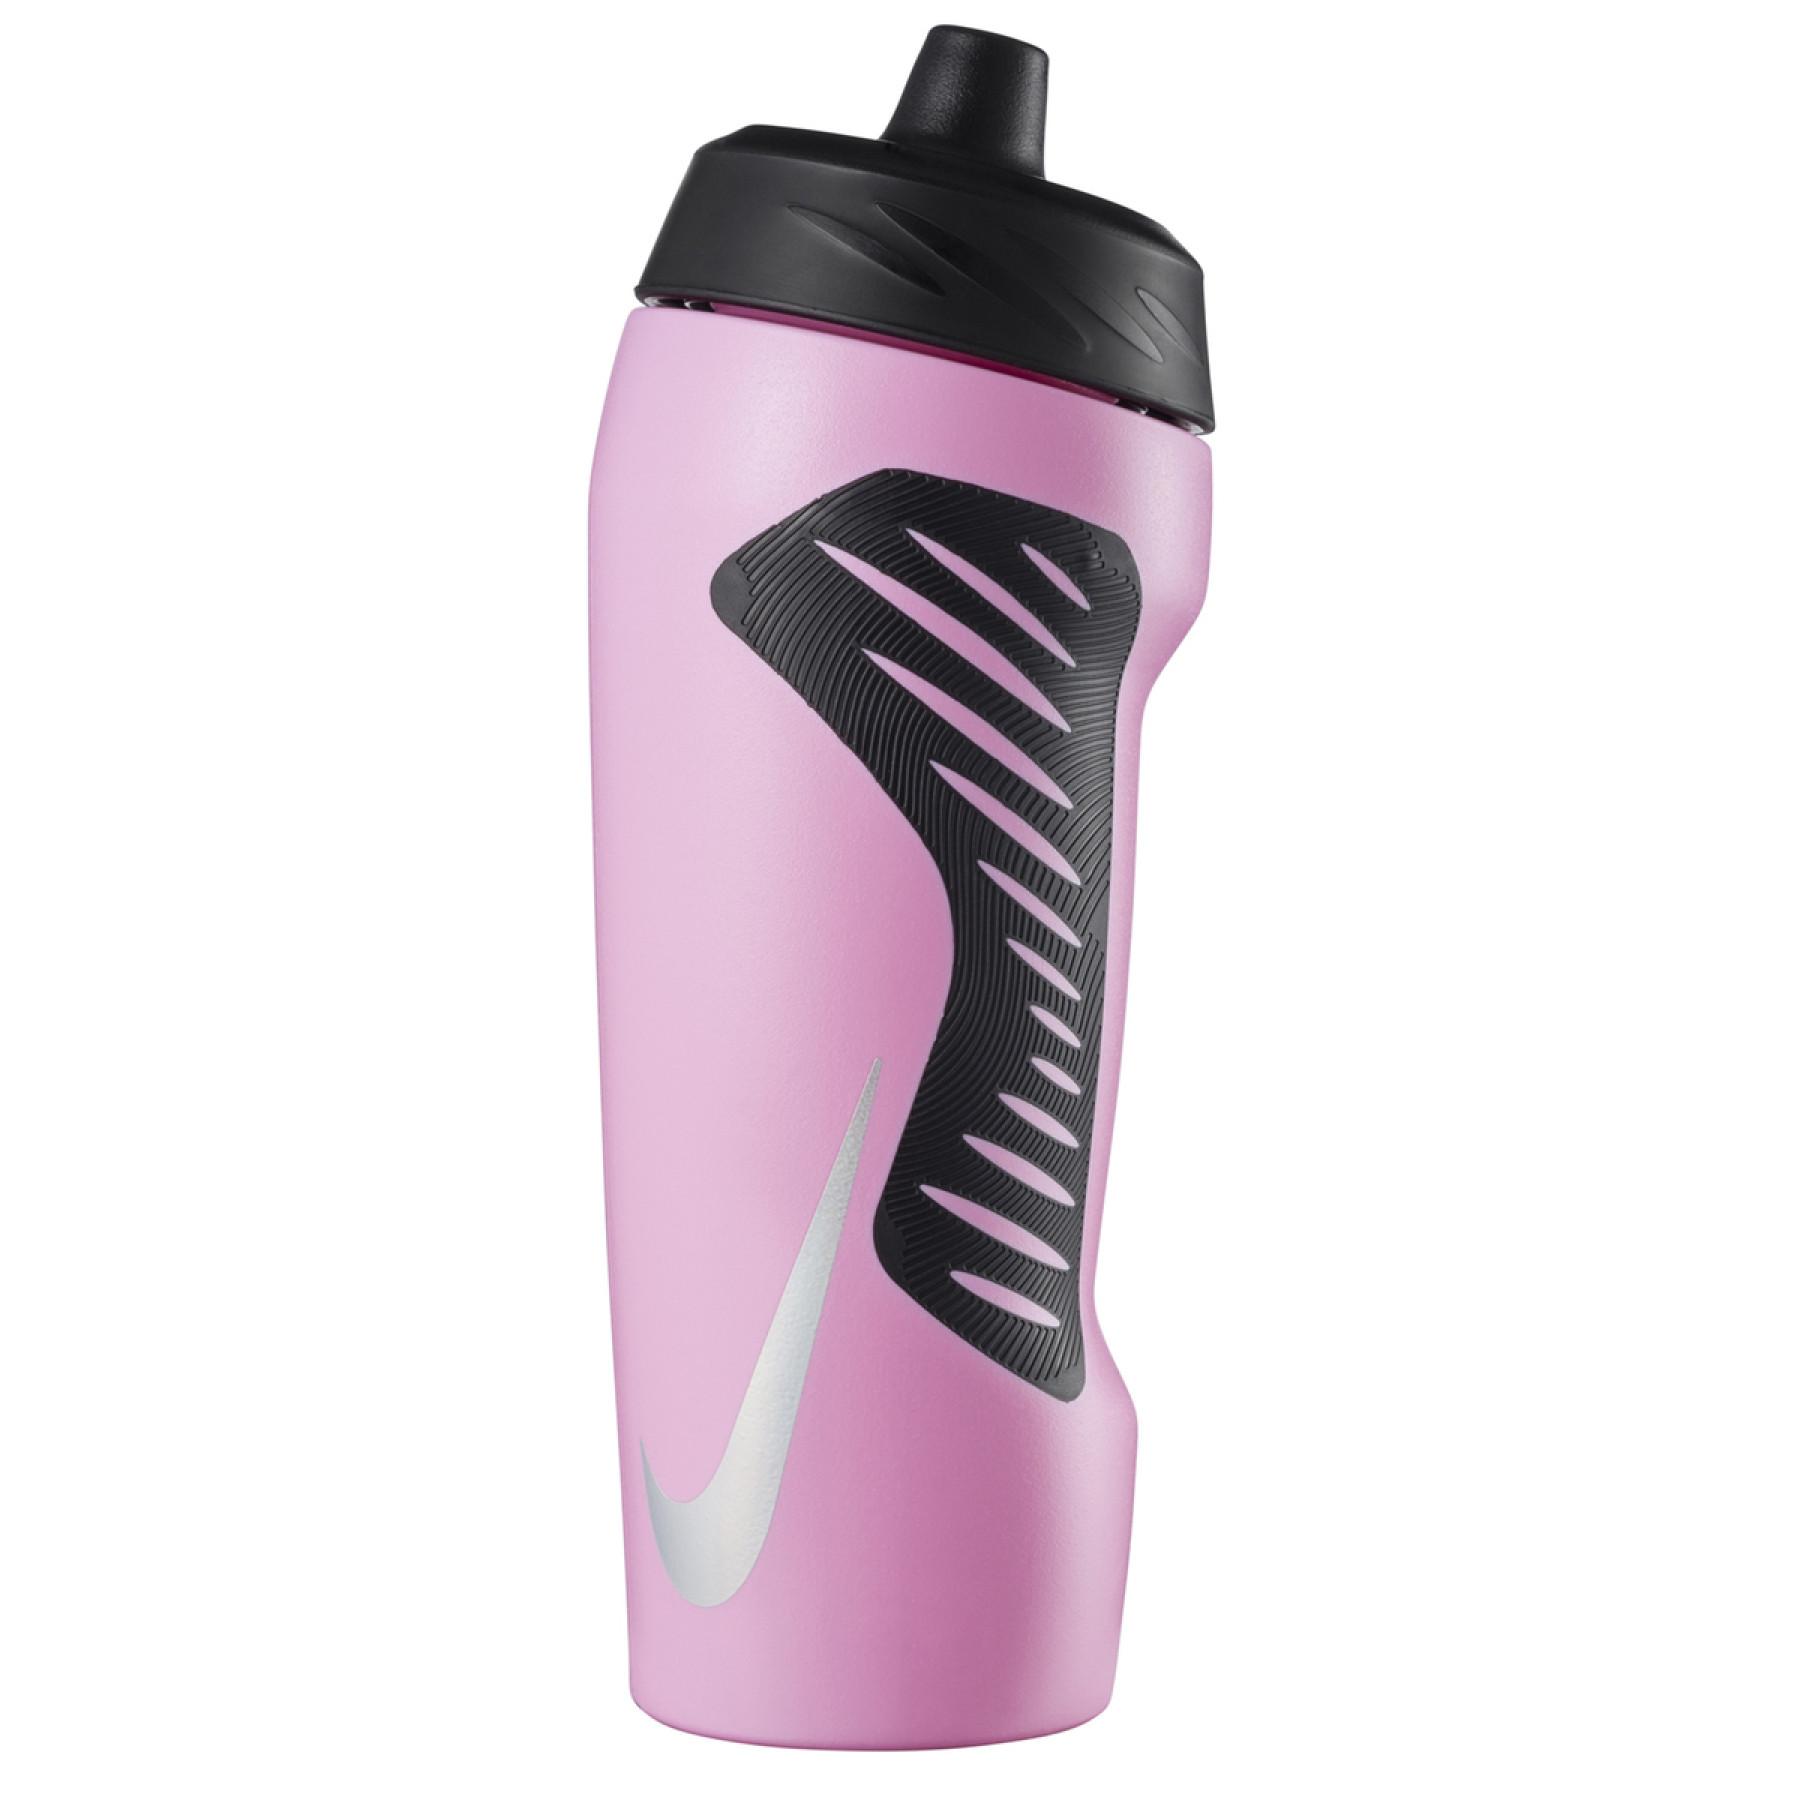 Botella Nike hyperfuel water 532 ml